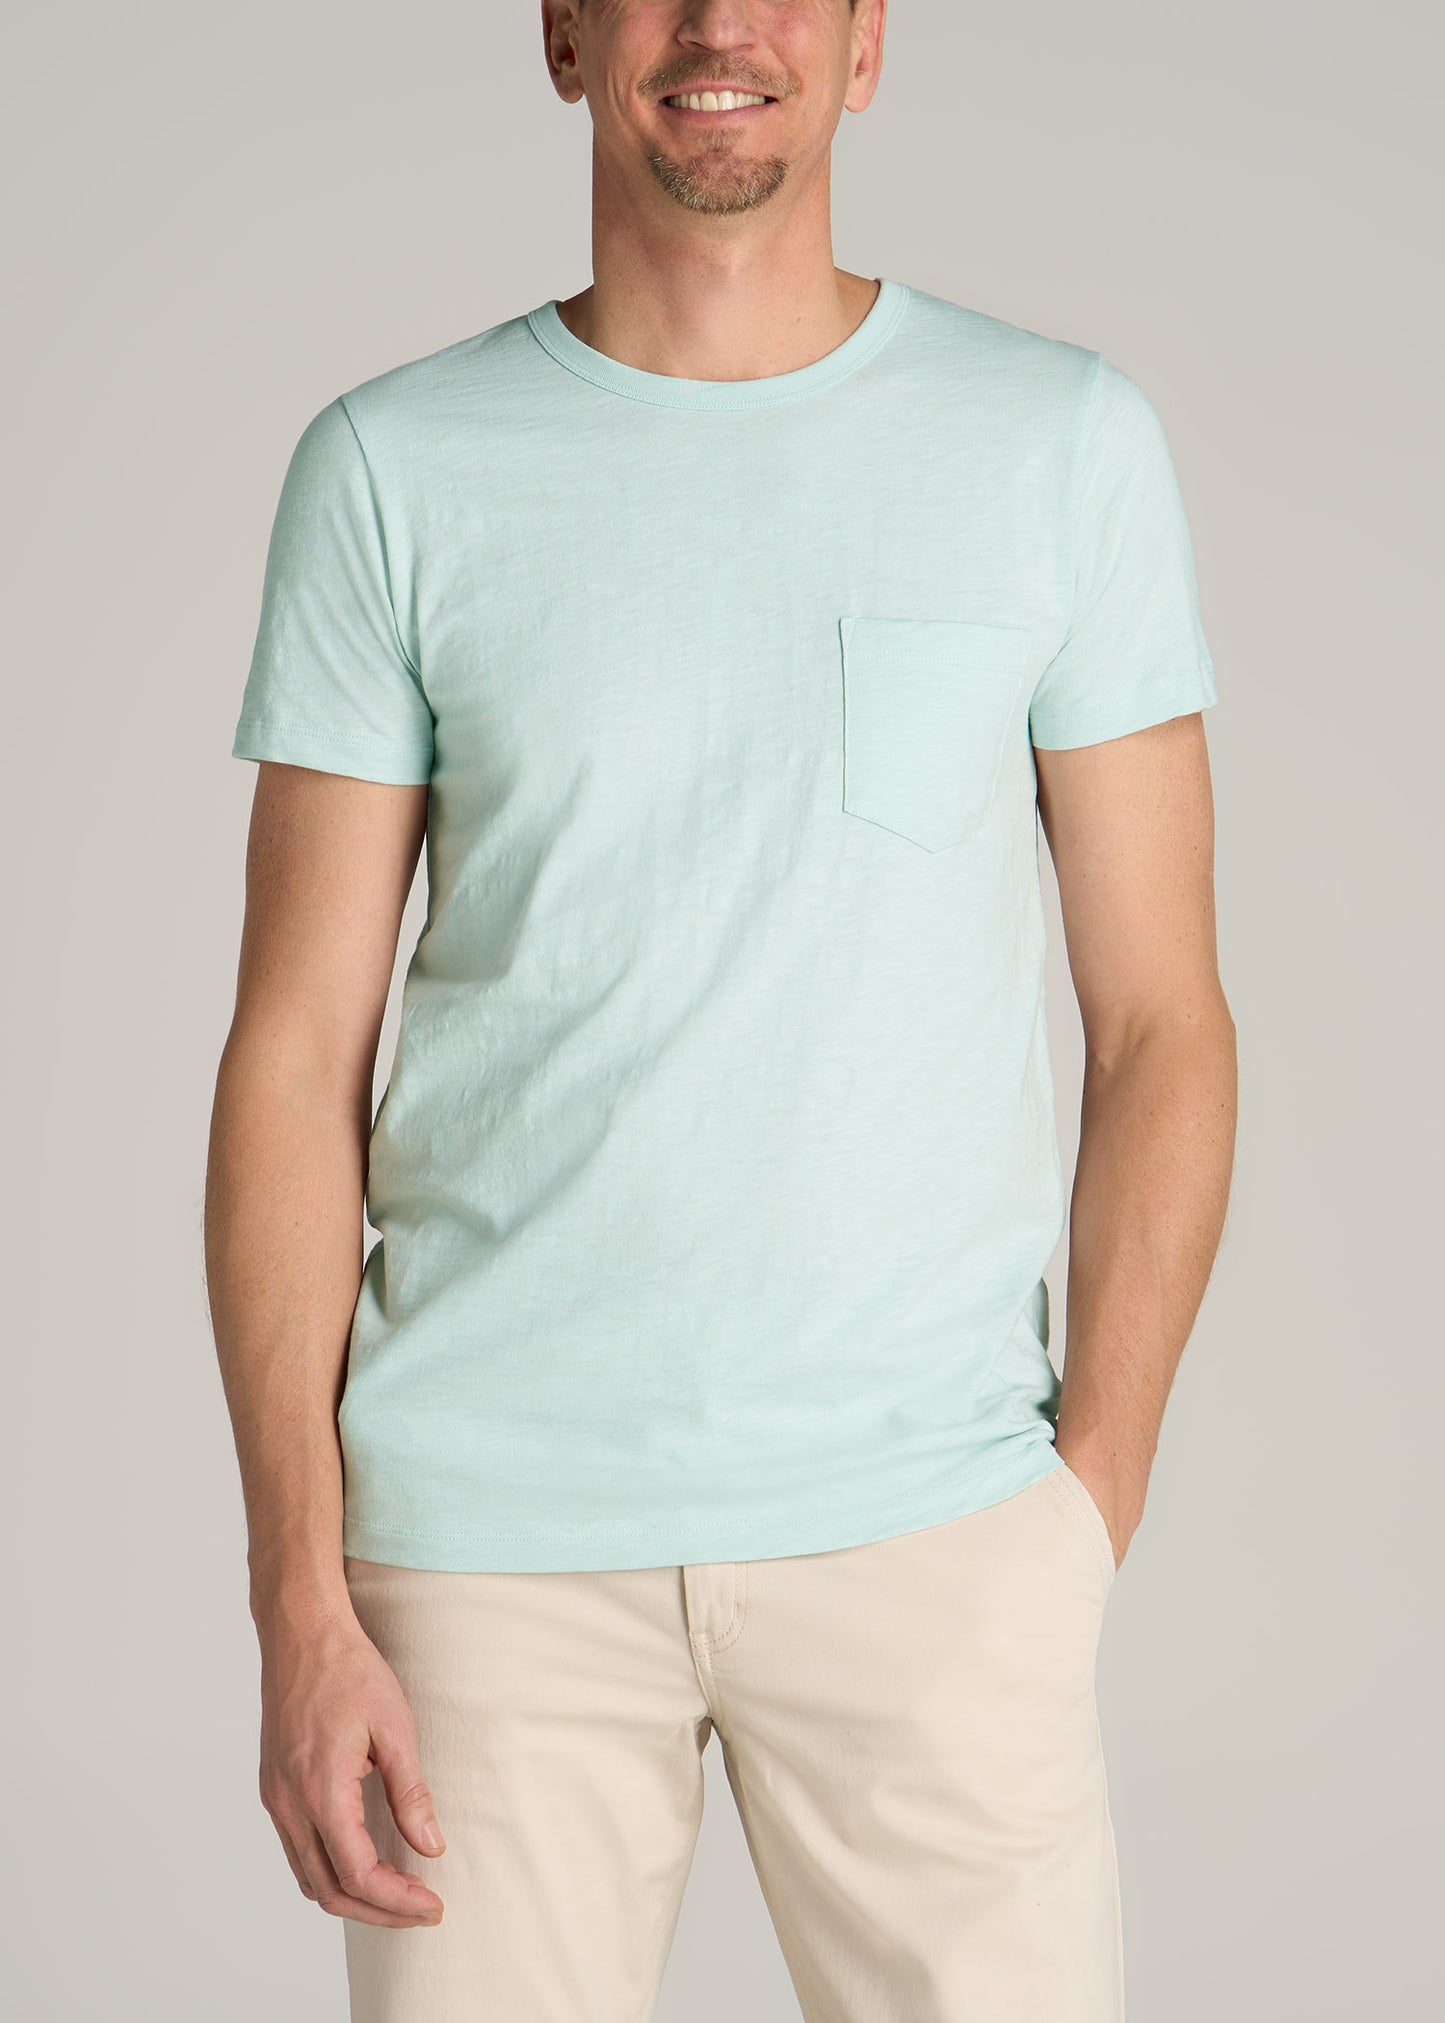 A tall man wearing American Tall's Sunwashed Slub Pocket T-Shirt For Tall Men in Mint.